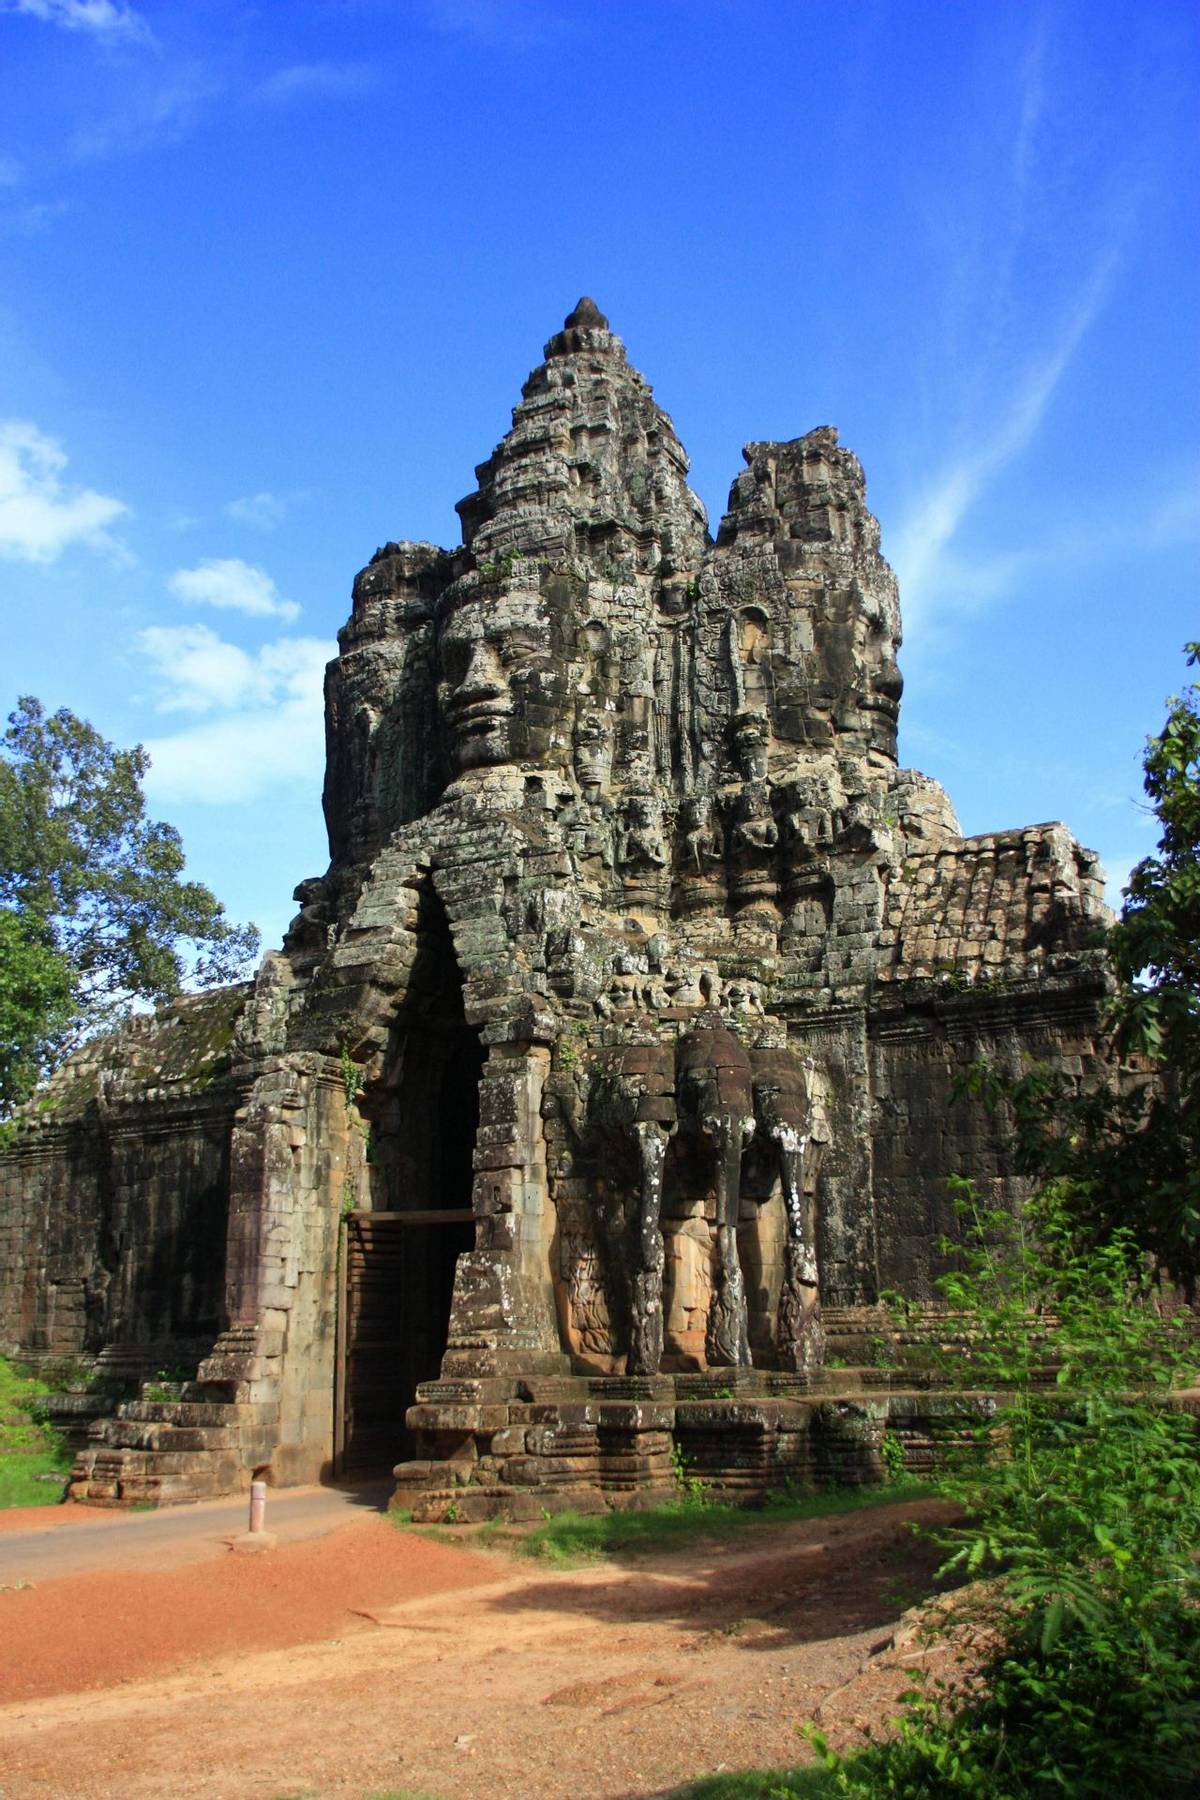 Laos&Cambodia - Angkor Thom - AdobeStock_109399229.jpg